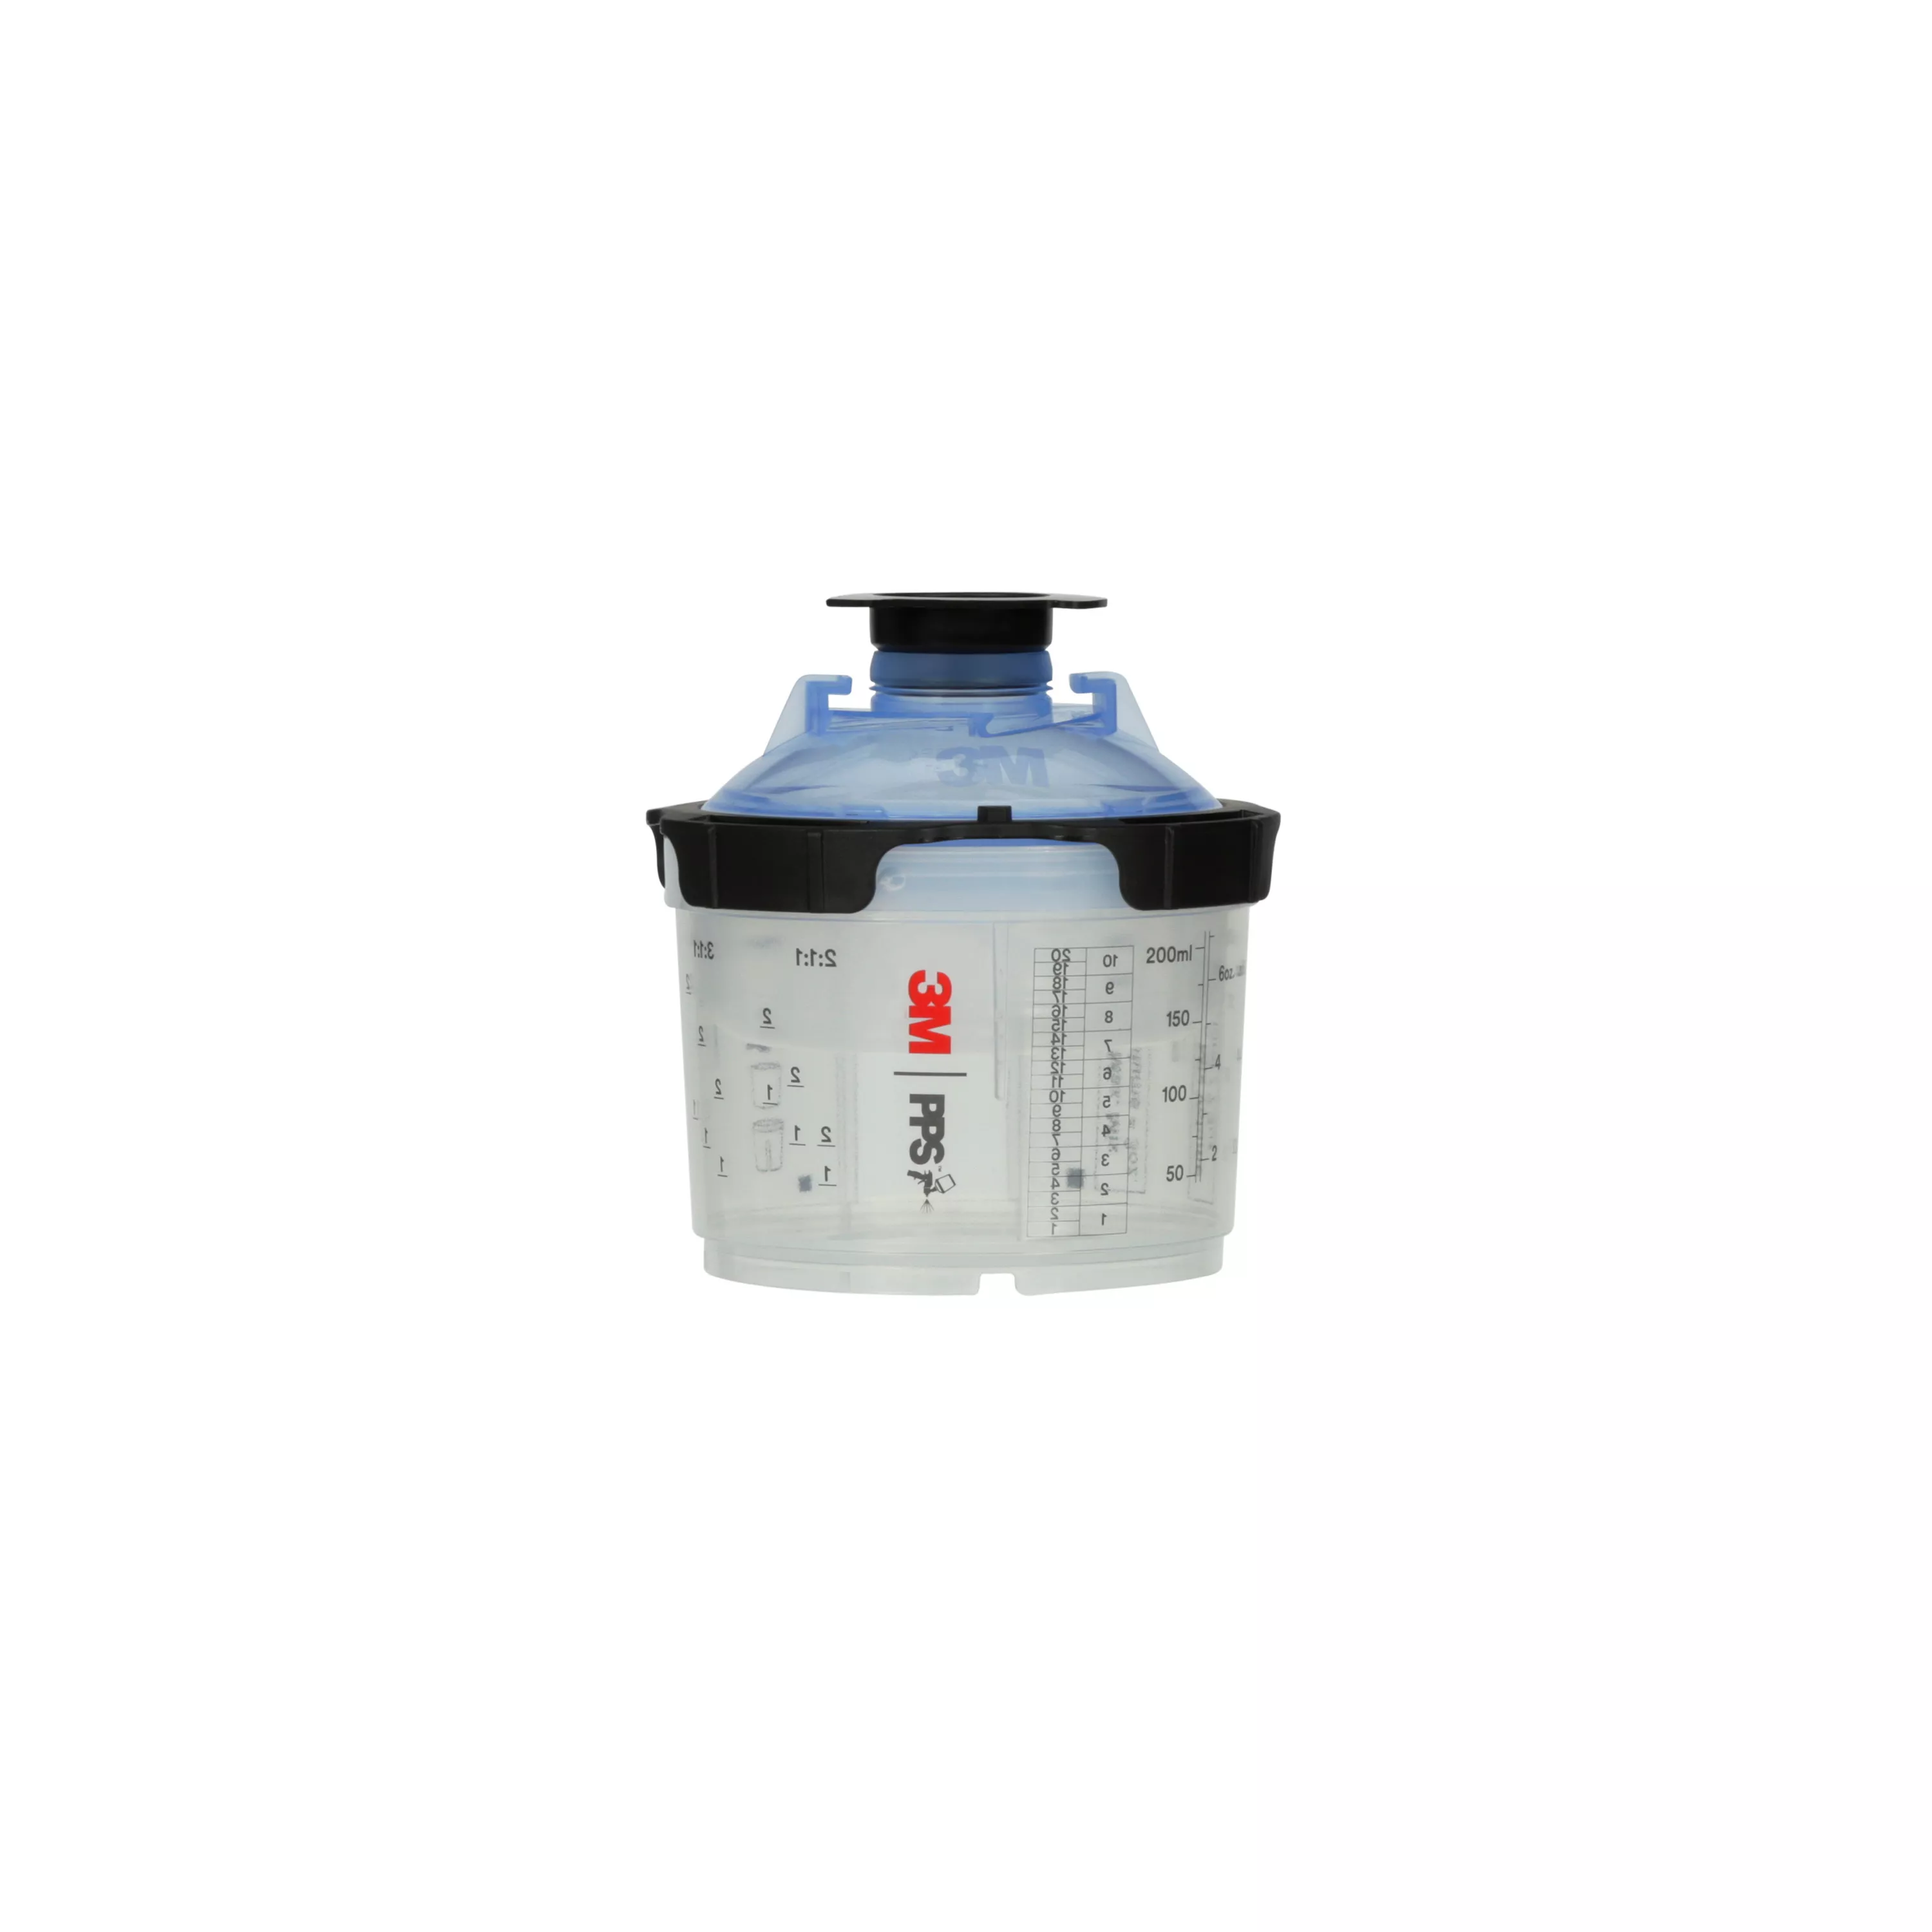 3M™ PPS™ Series 2.0 Spray Cup System Kit 26328, Micro (3 fl oz, 90 mL),
125 Micron Filter, 1 Kit/Case